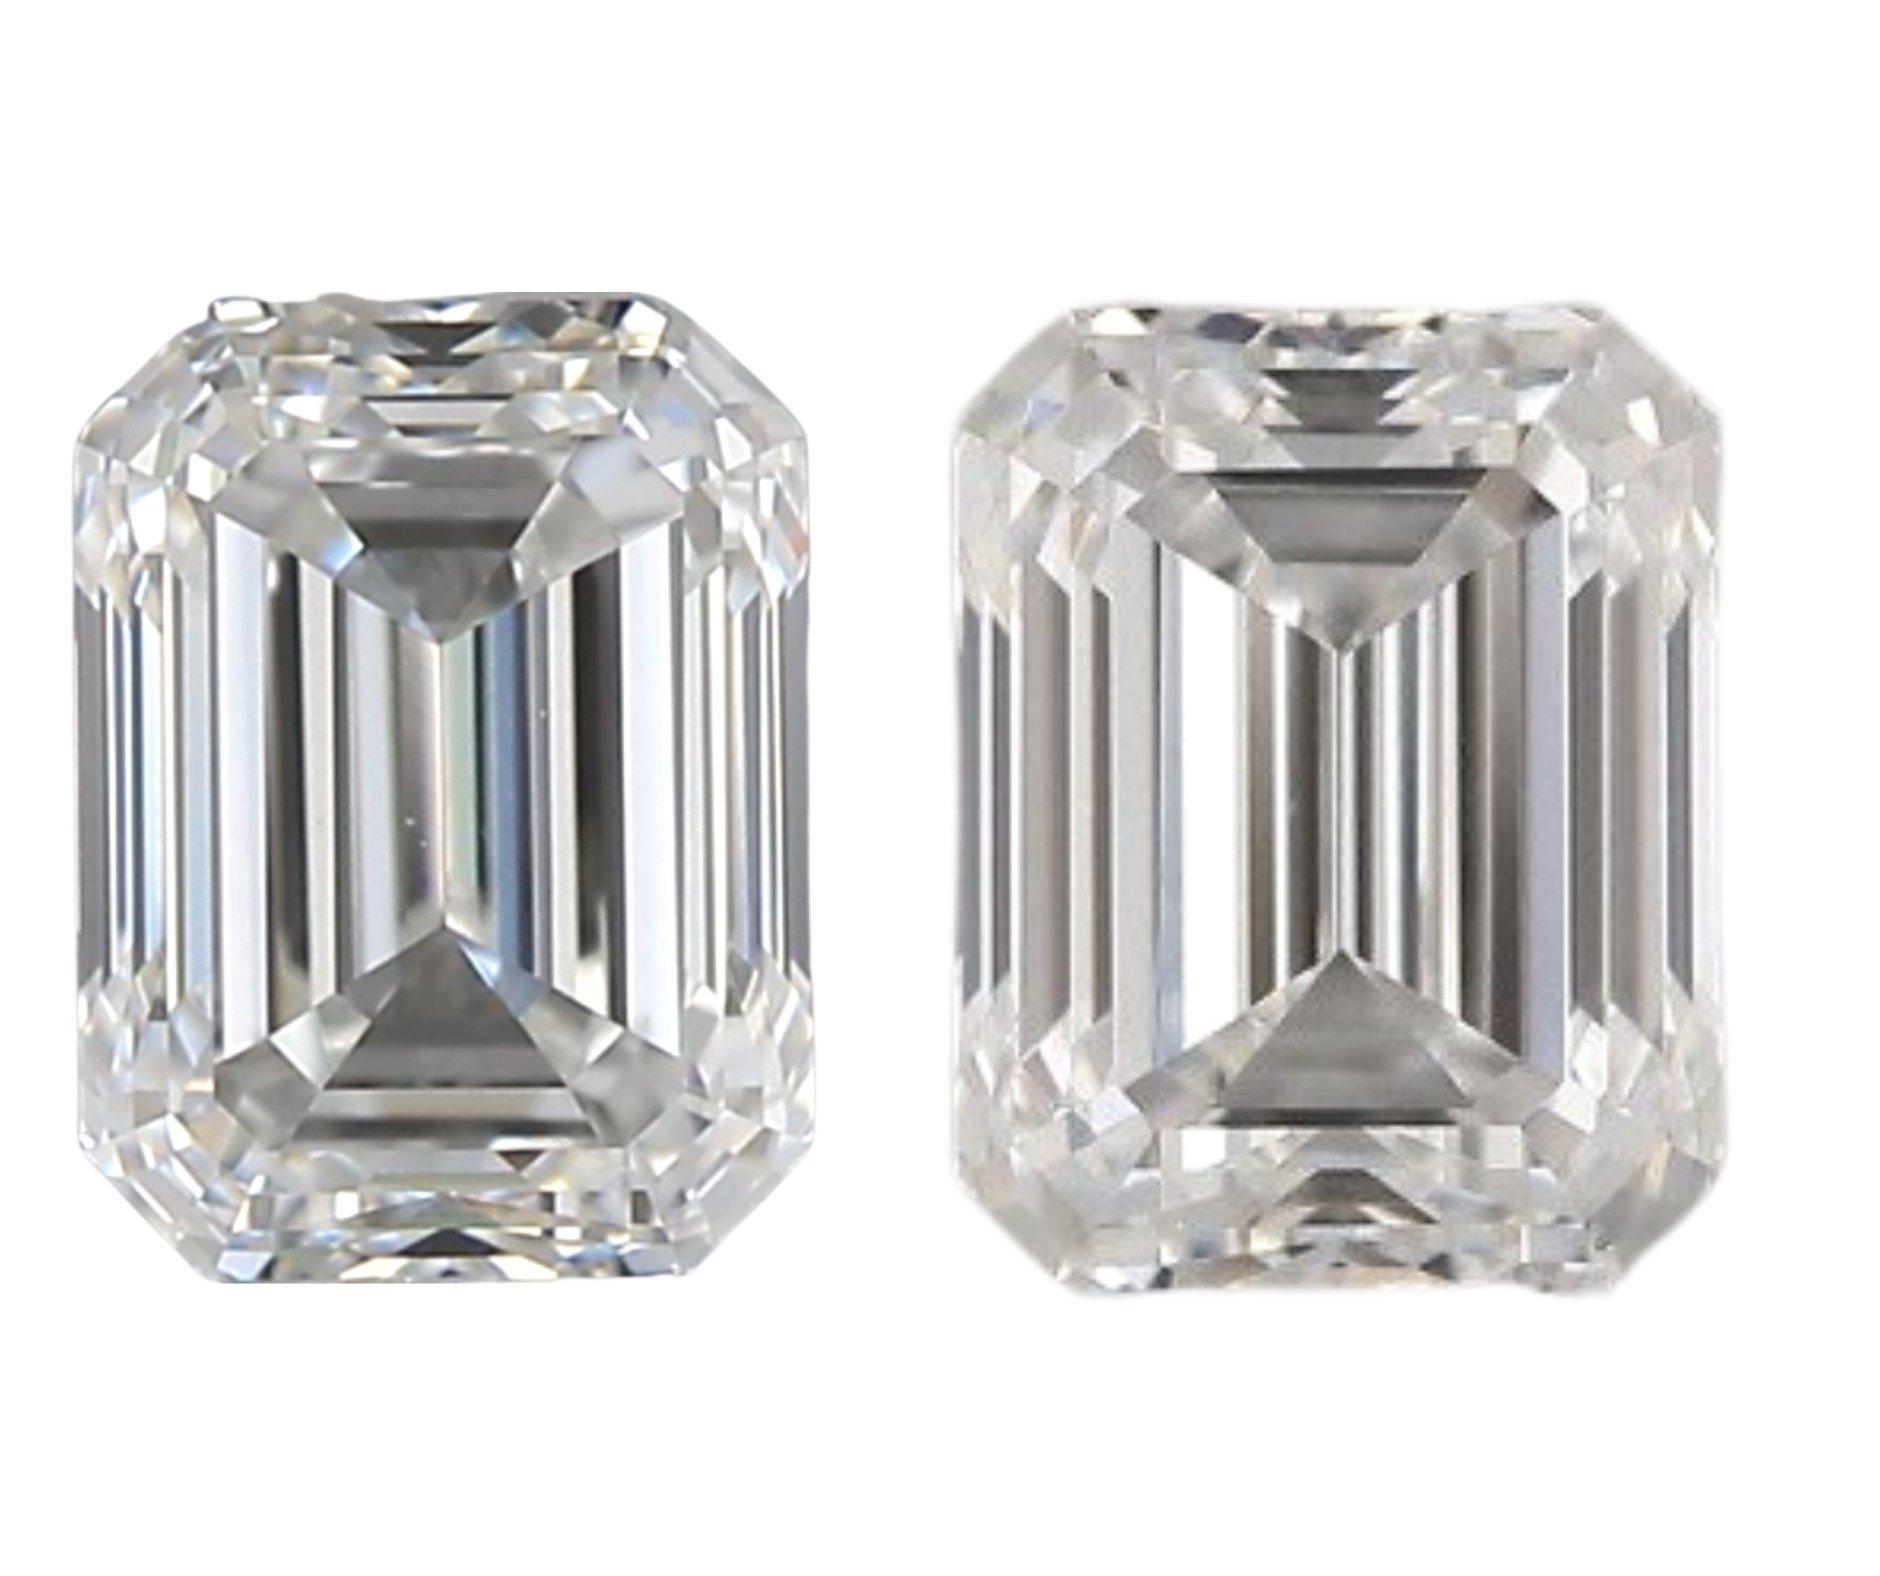 2 Teile, natürliche Diamanten, 0,81 Karat, Smaragd, I, Falls 'Flawless', GIA-Zertifikat im Angebot 3